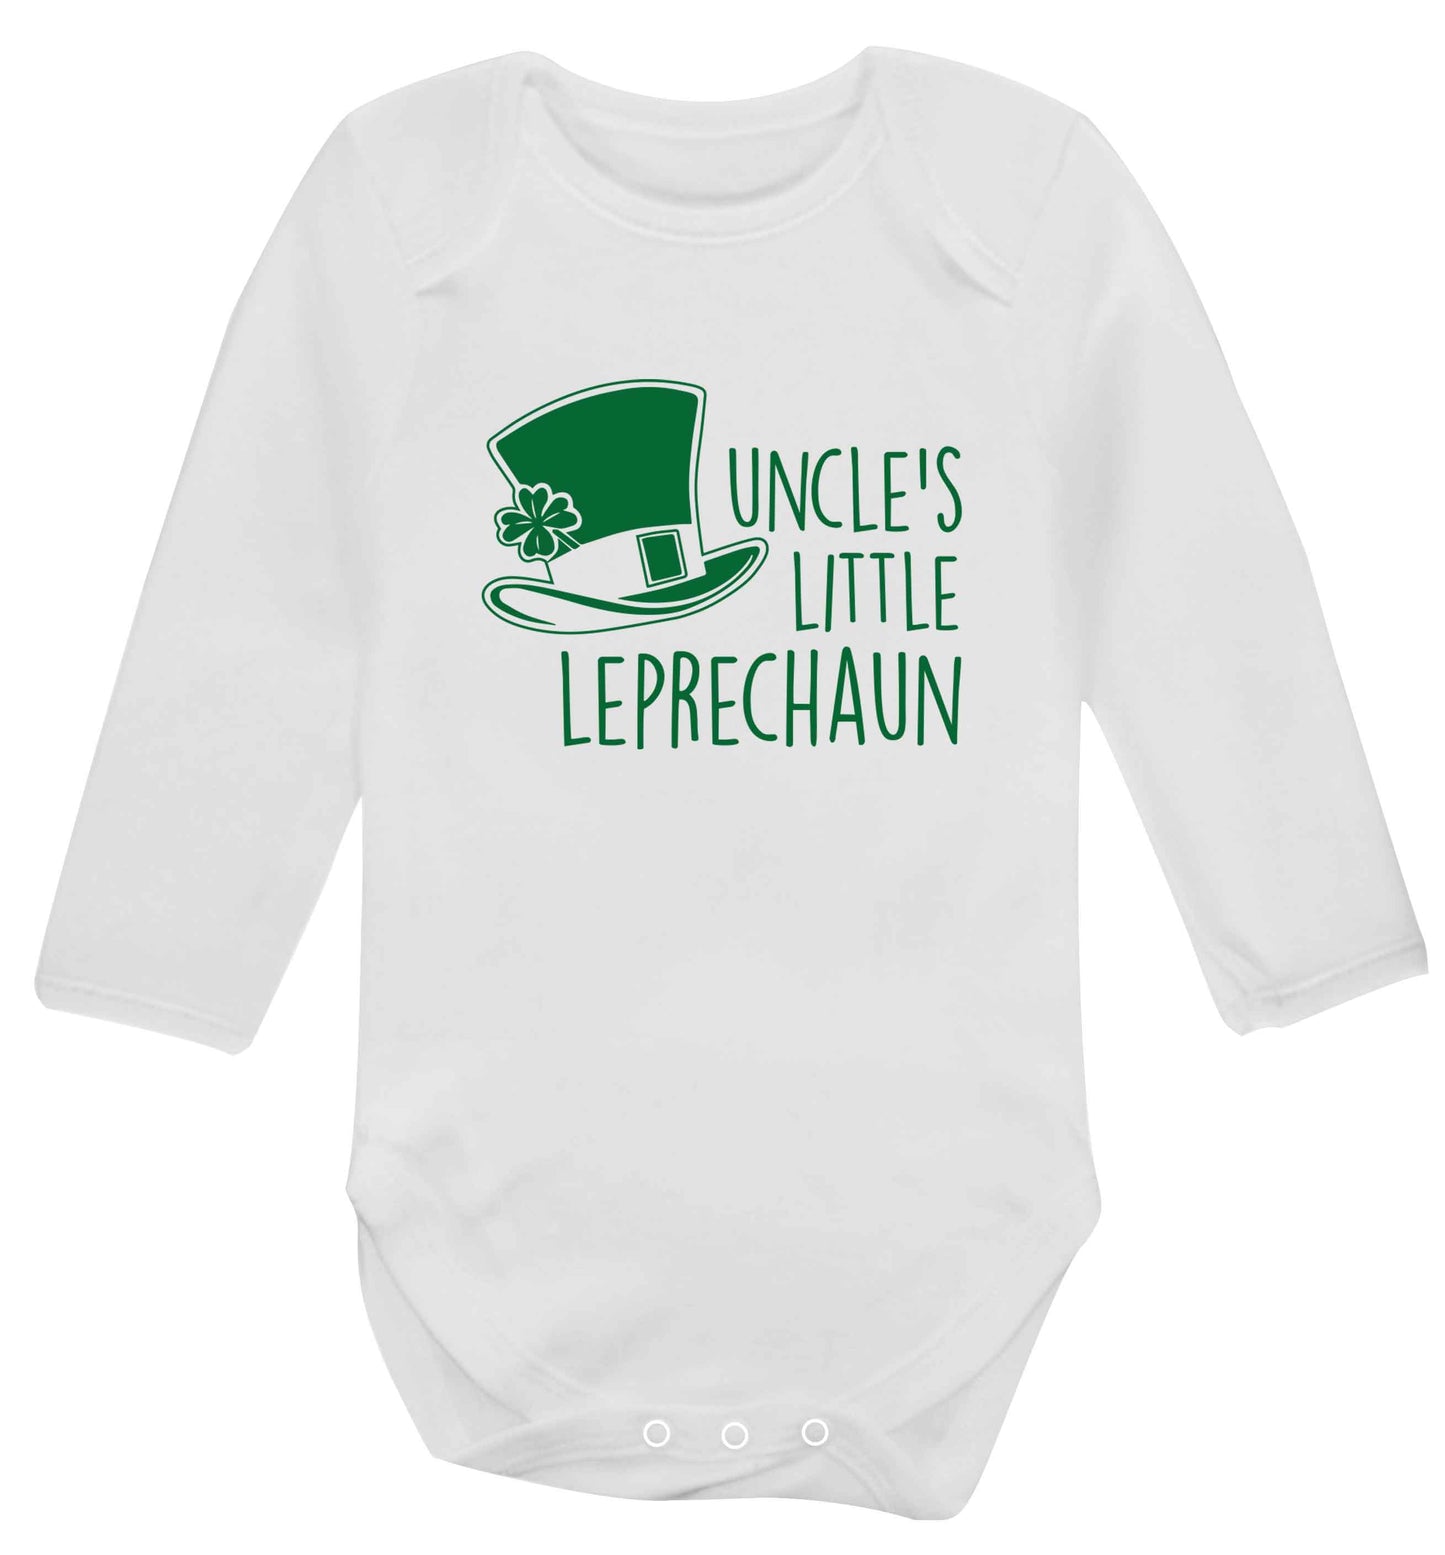 Uncles little leprechaun baby vest long sleeved white 6-12 months